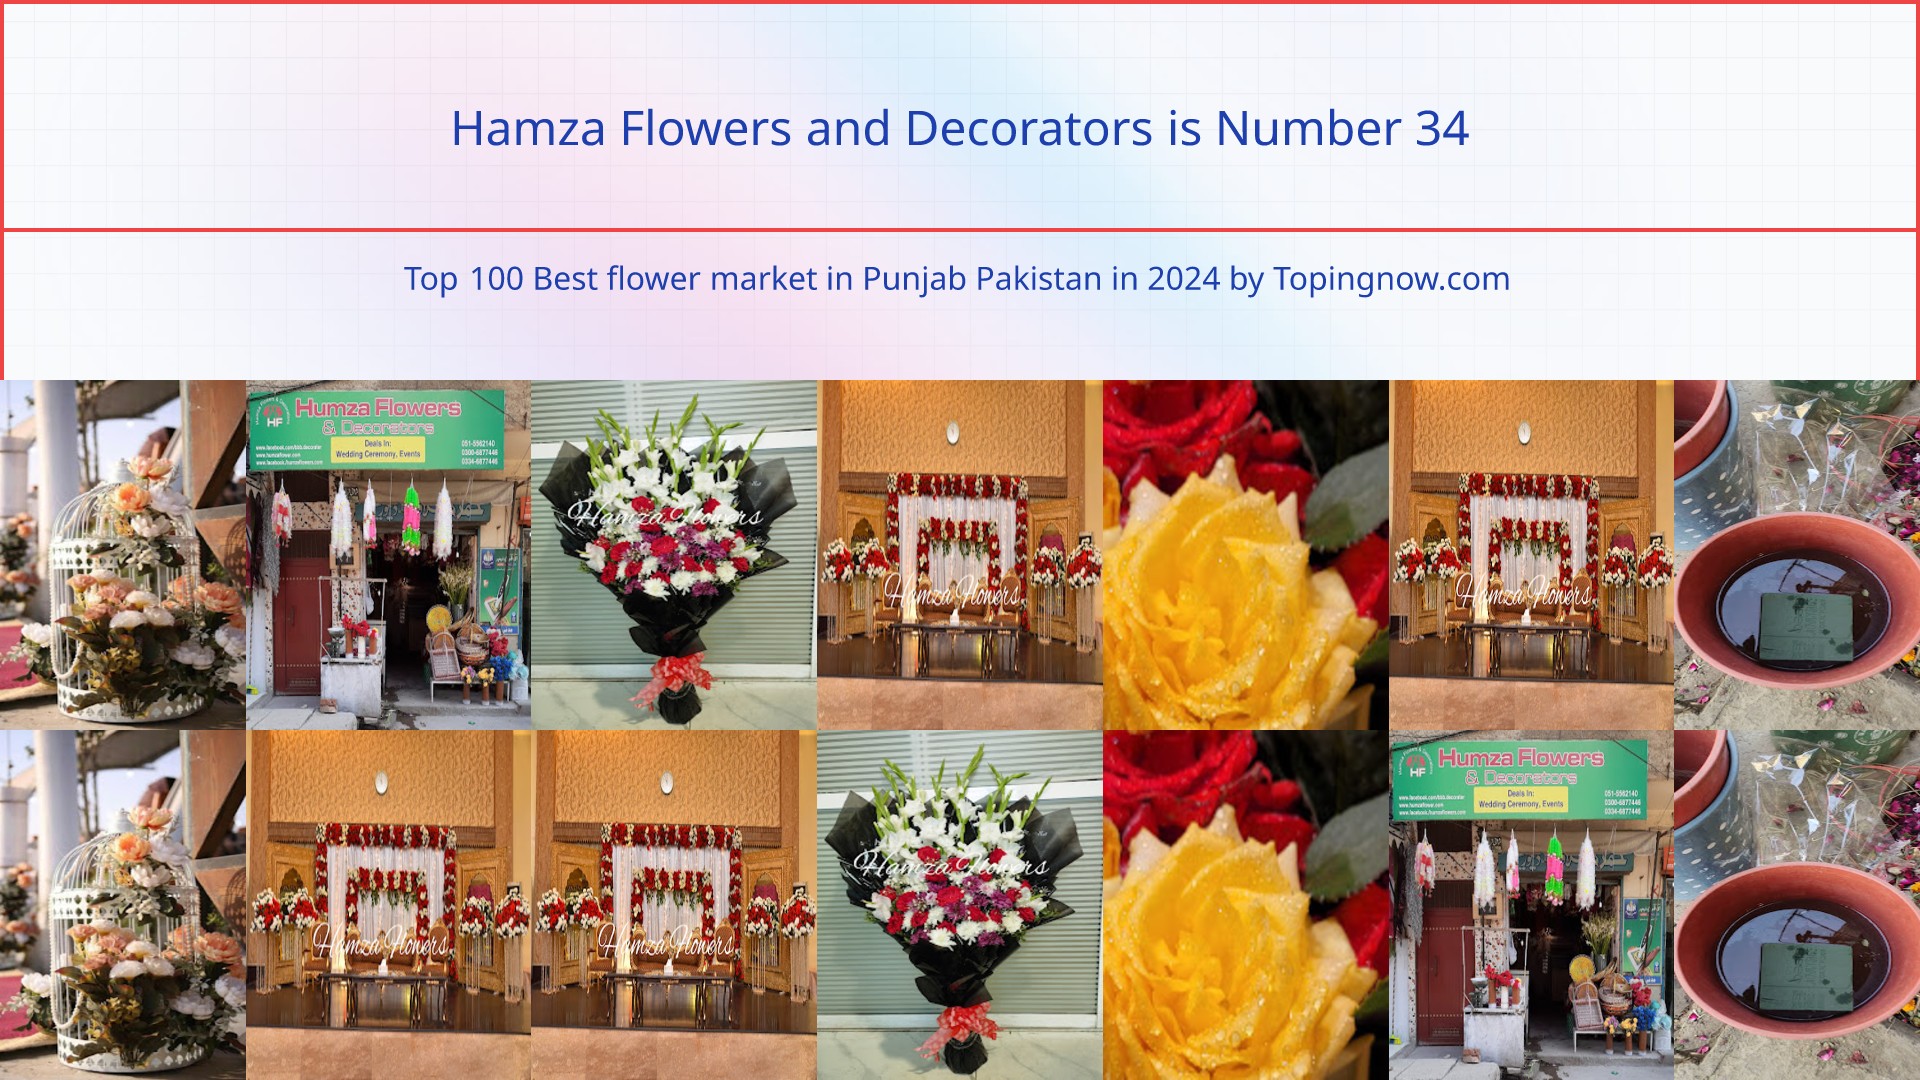 Hamza Flowers and Decorators: Top 100 Best flower market in Punjab Pakistan in 2024